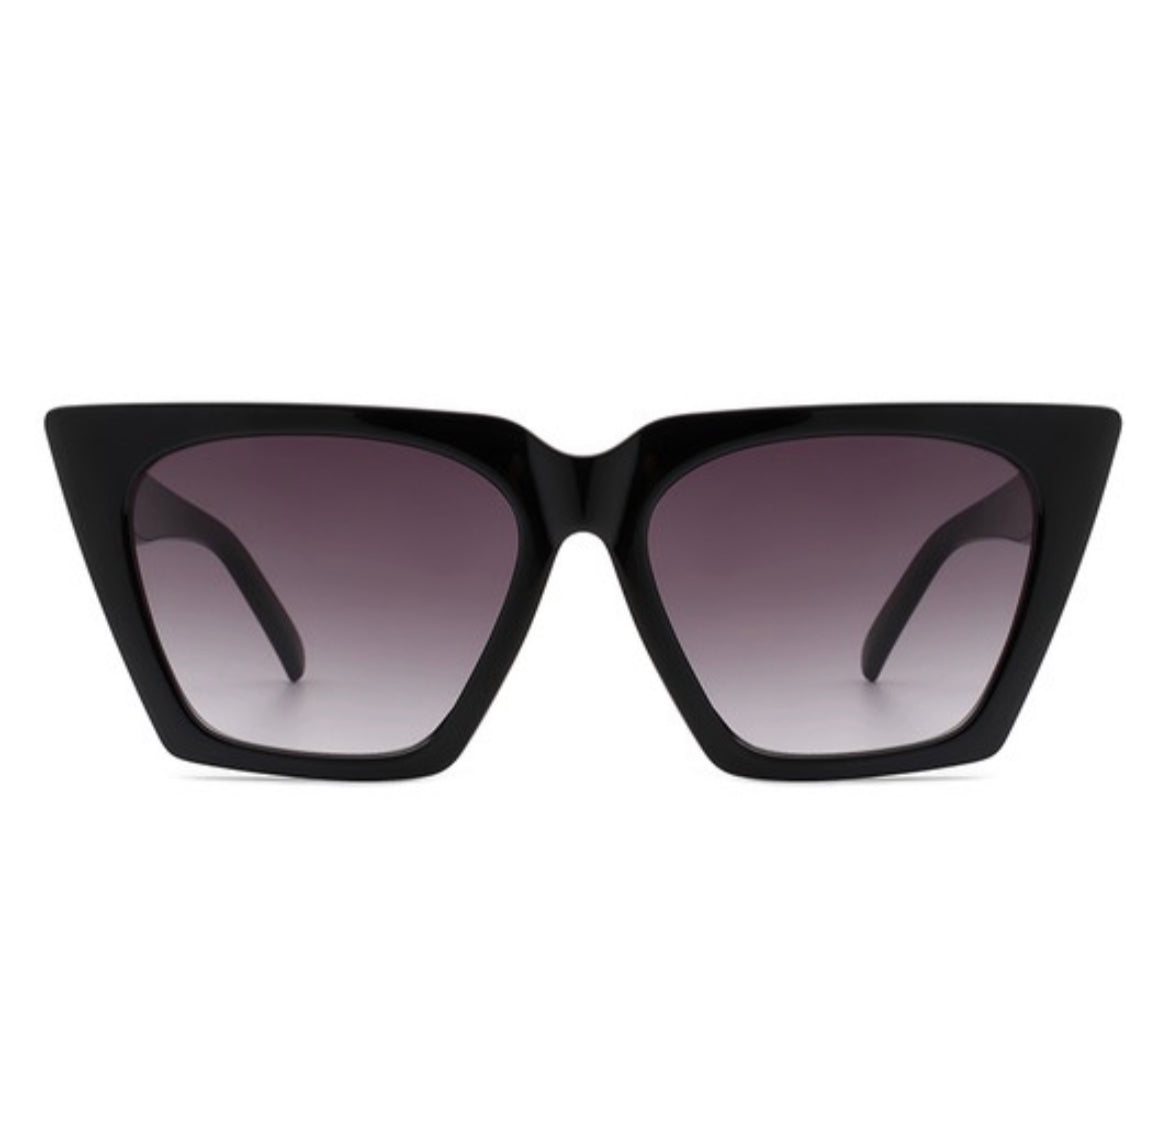 The Cat Eye Sunglasses